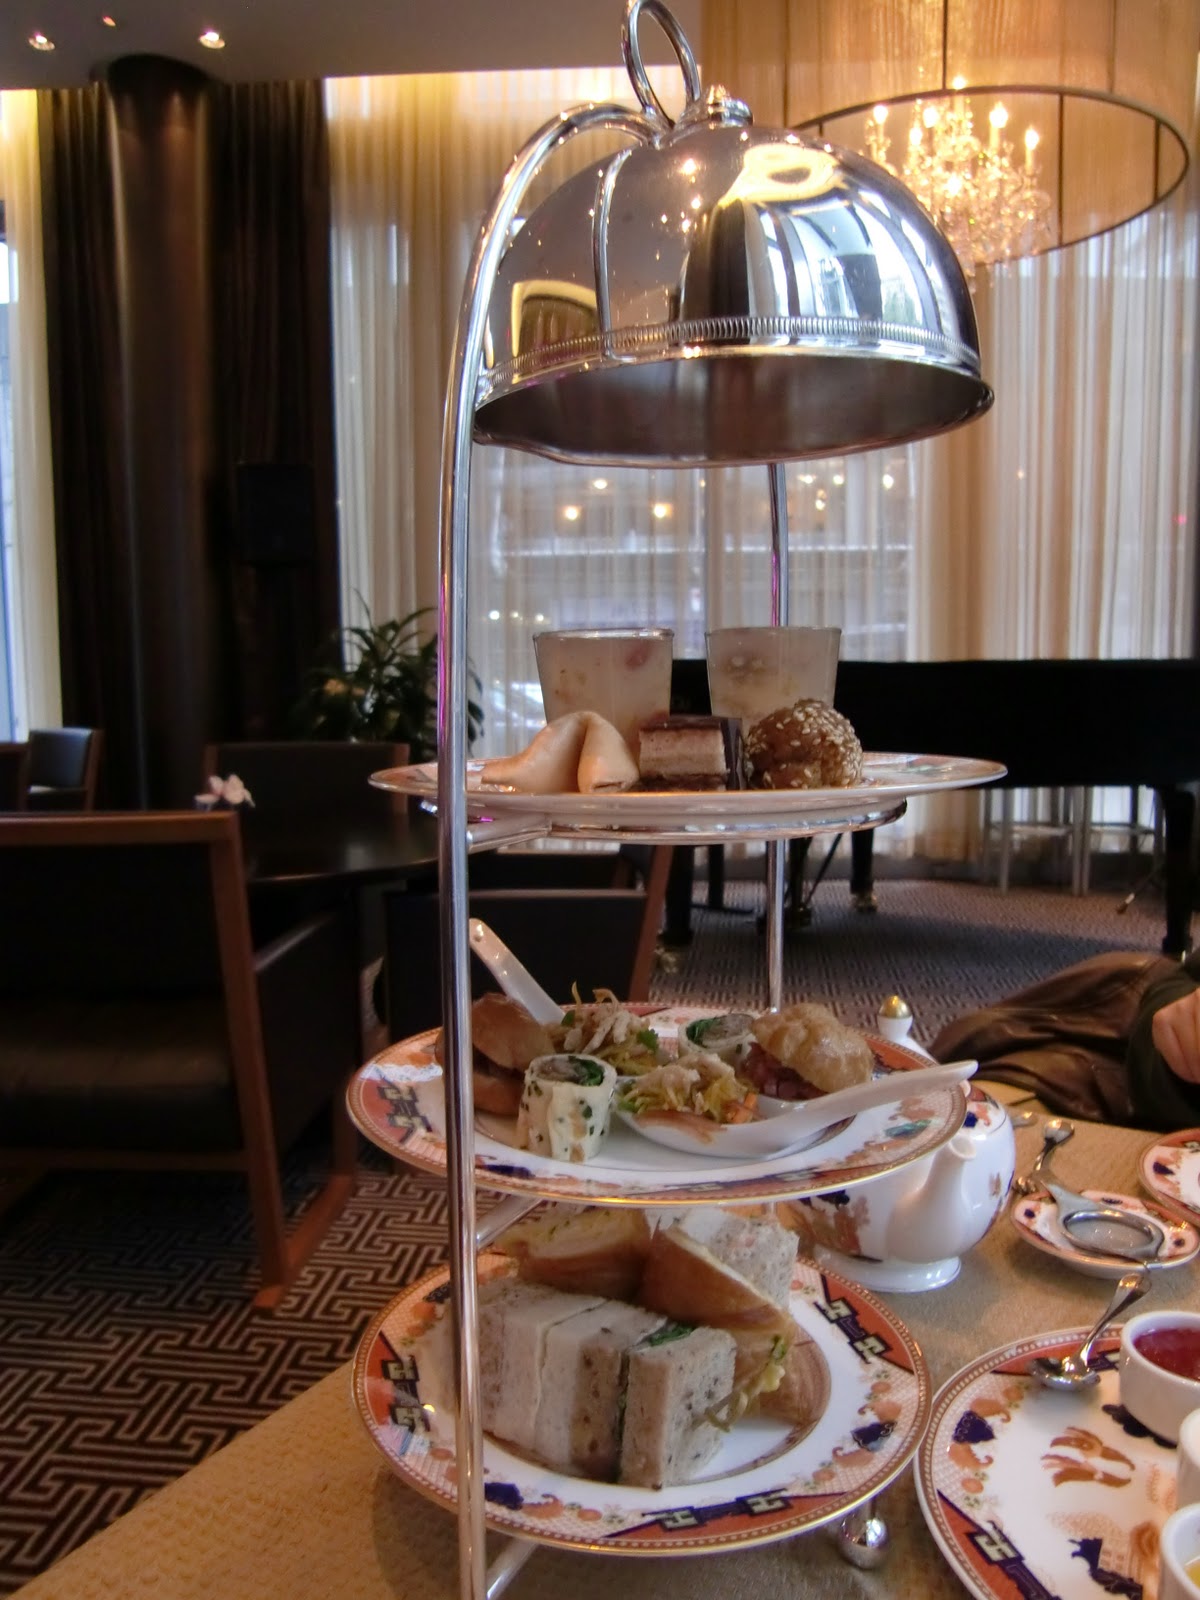 Linda's Blog of Vancouver Dining: Afternoon Tea at Shangri-La Hotel's ...